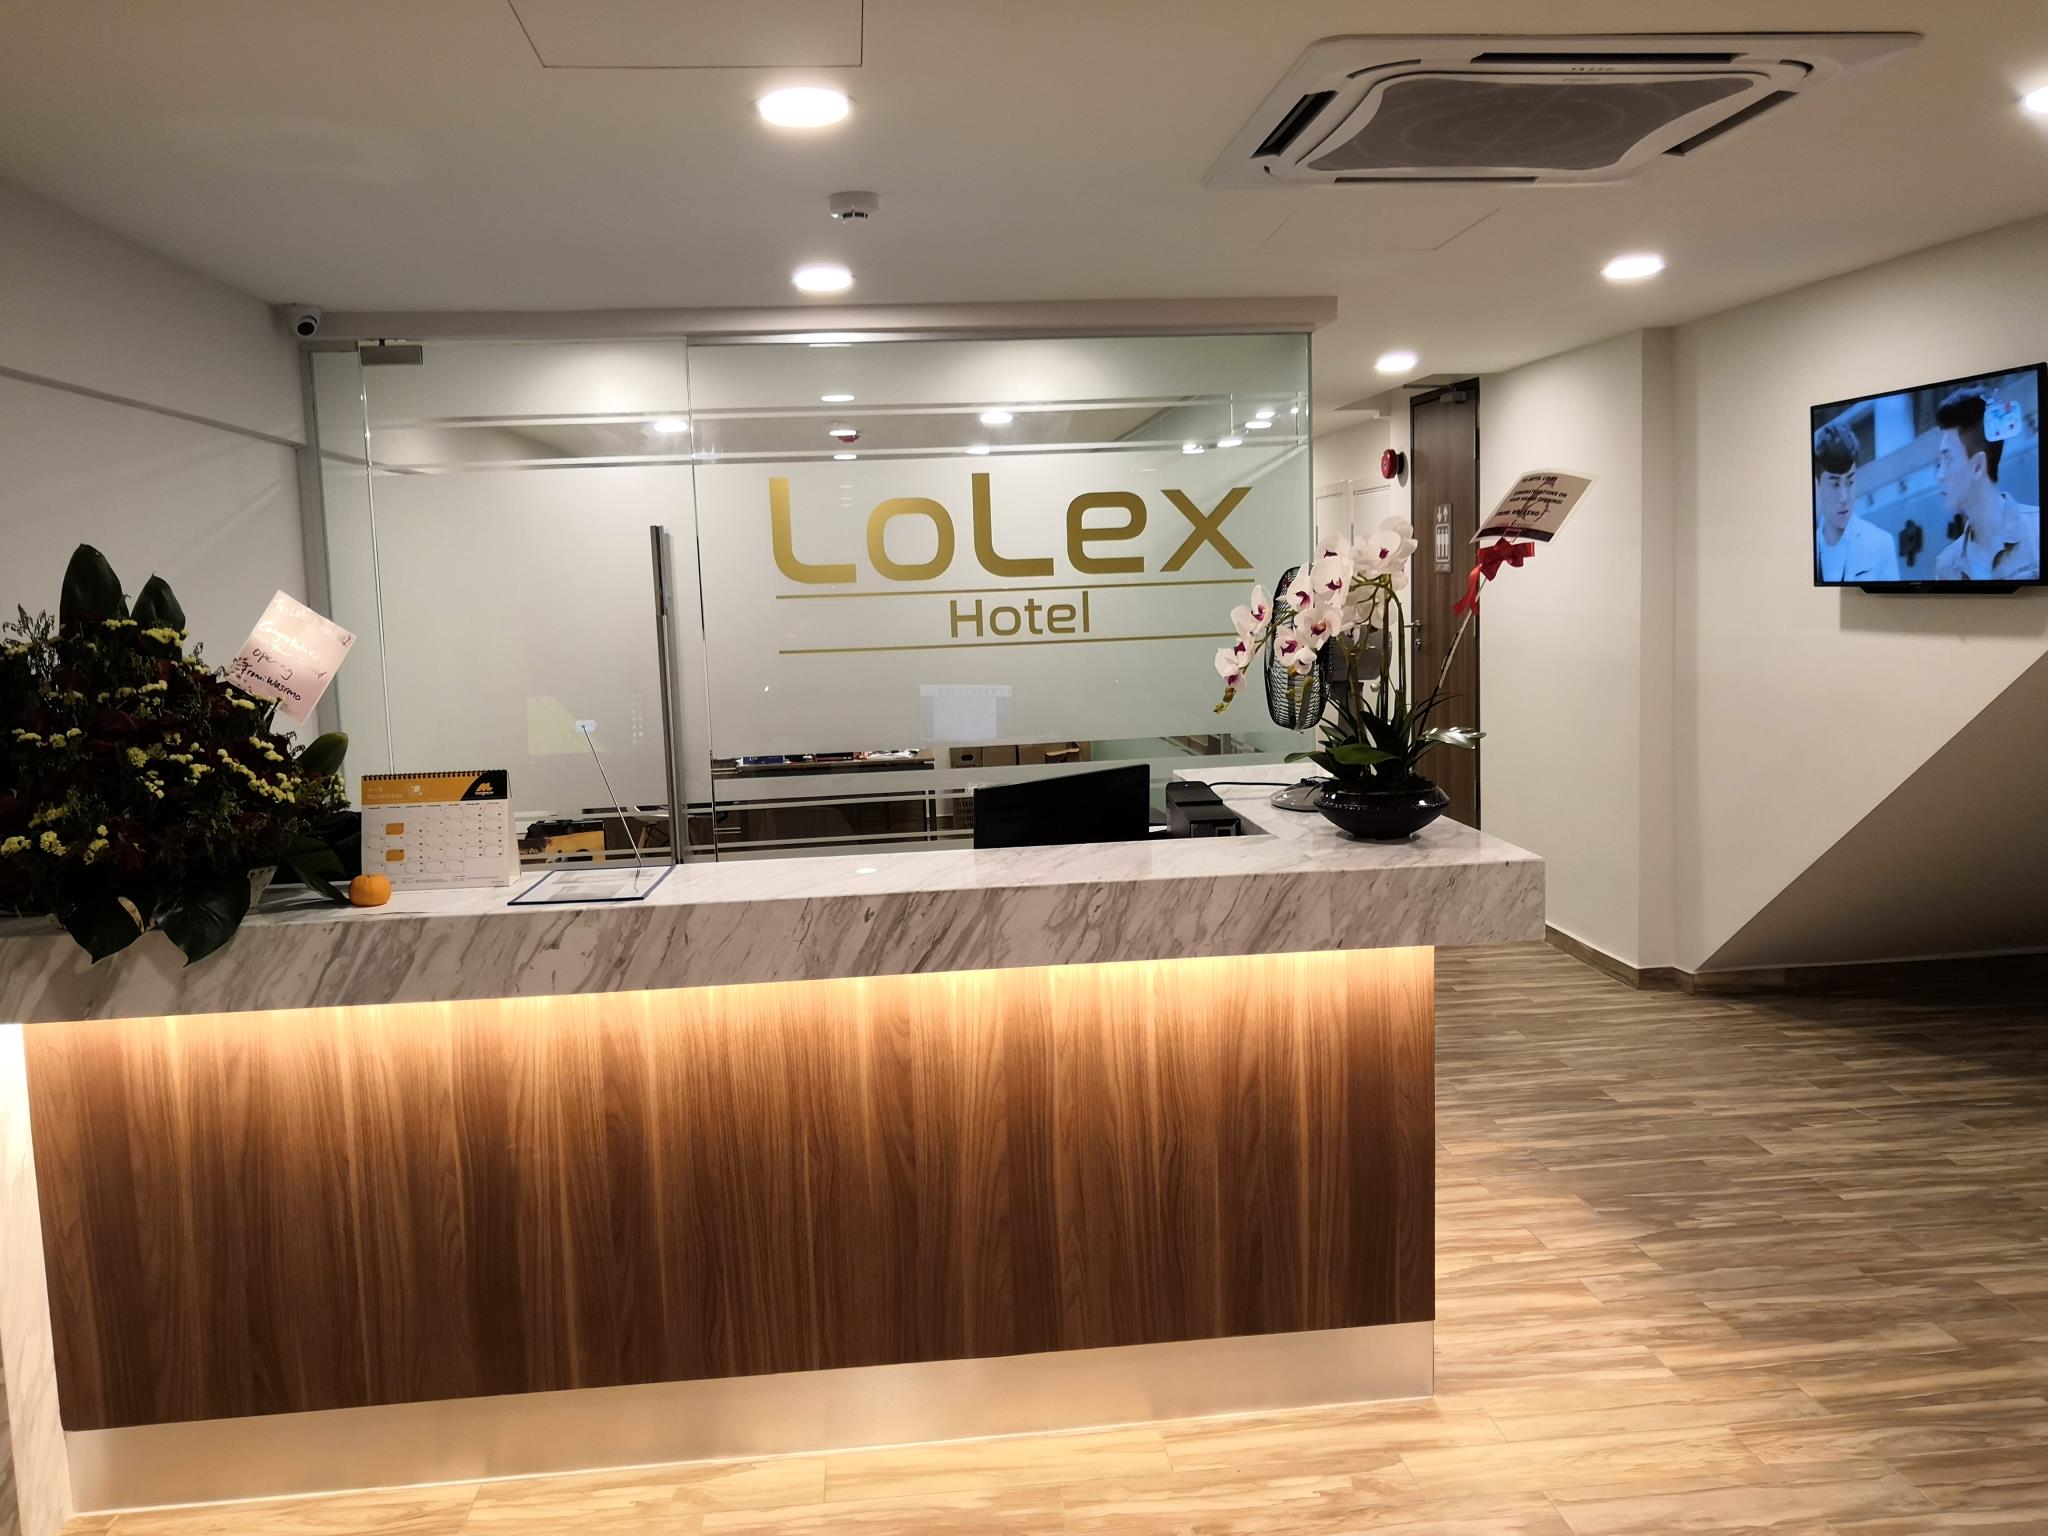 LoLex Hotel image 1